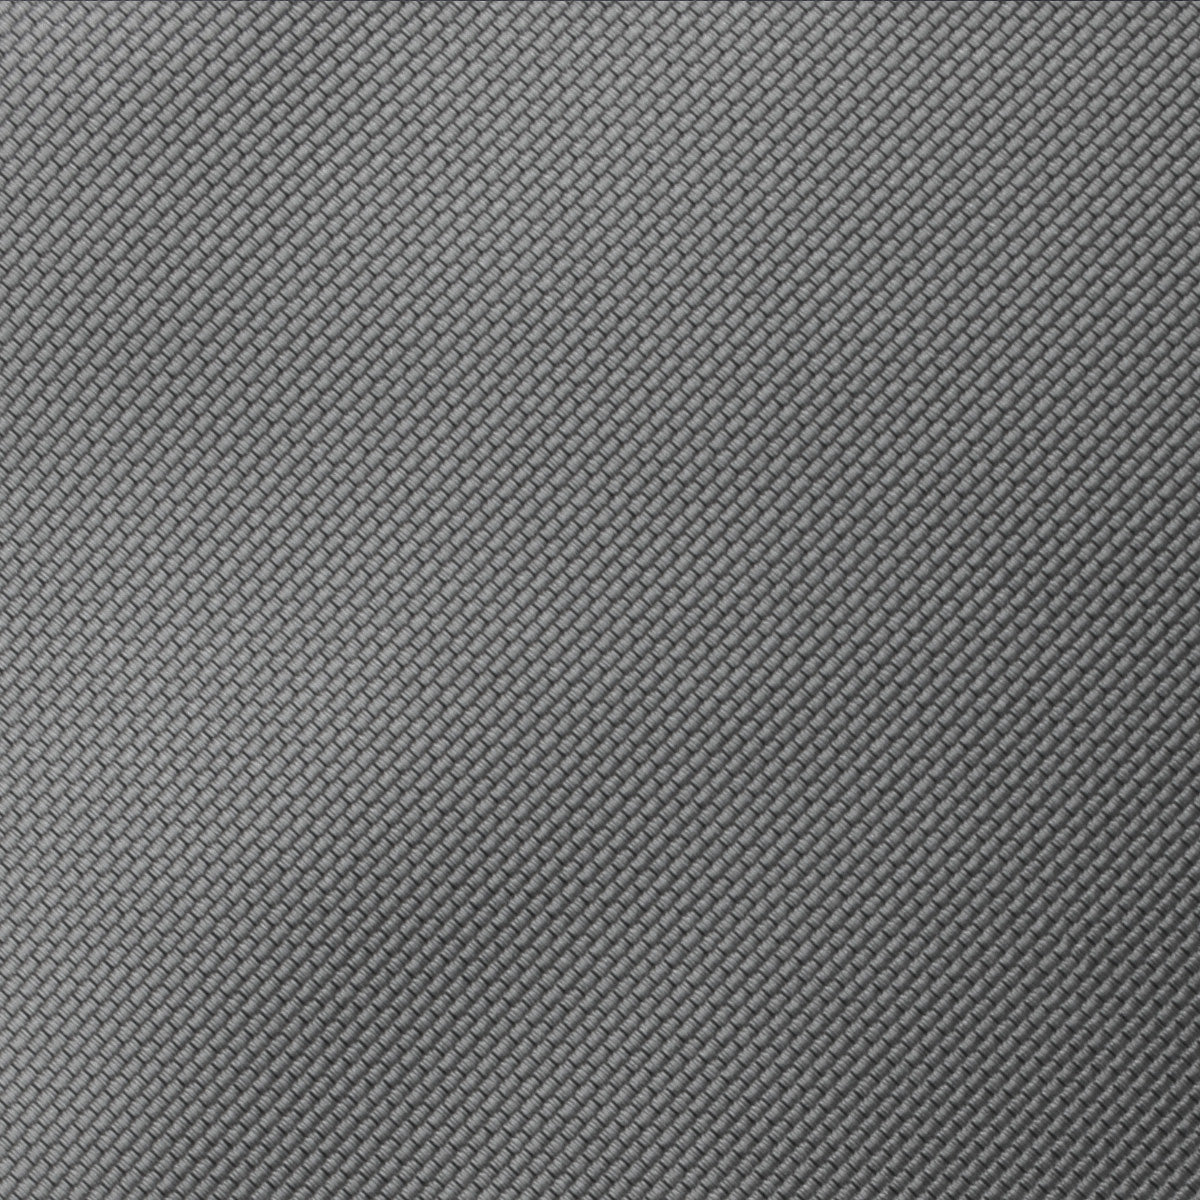 Mercury Grey Weave Fabric Swatch